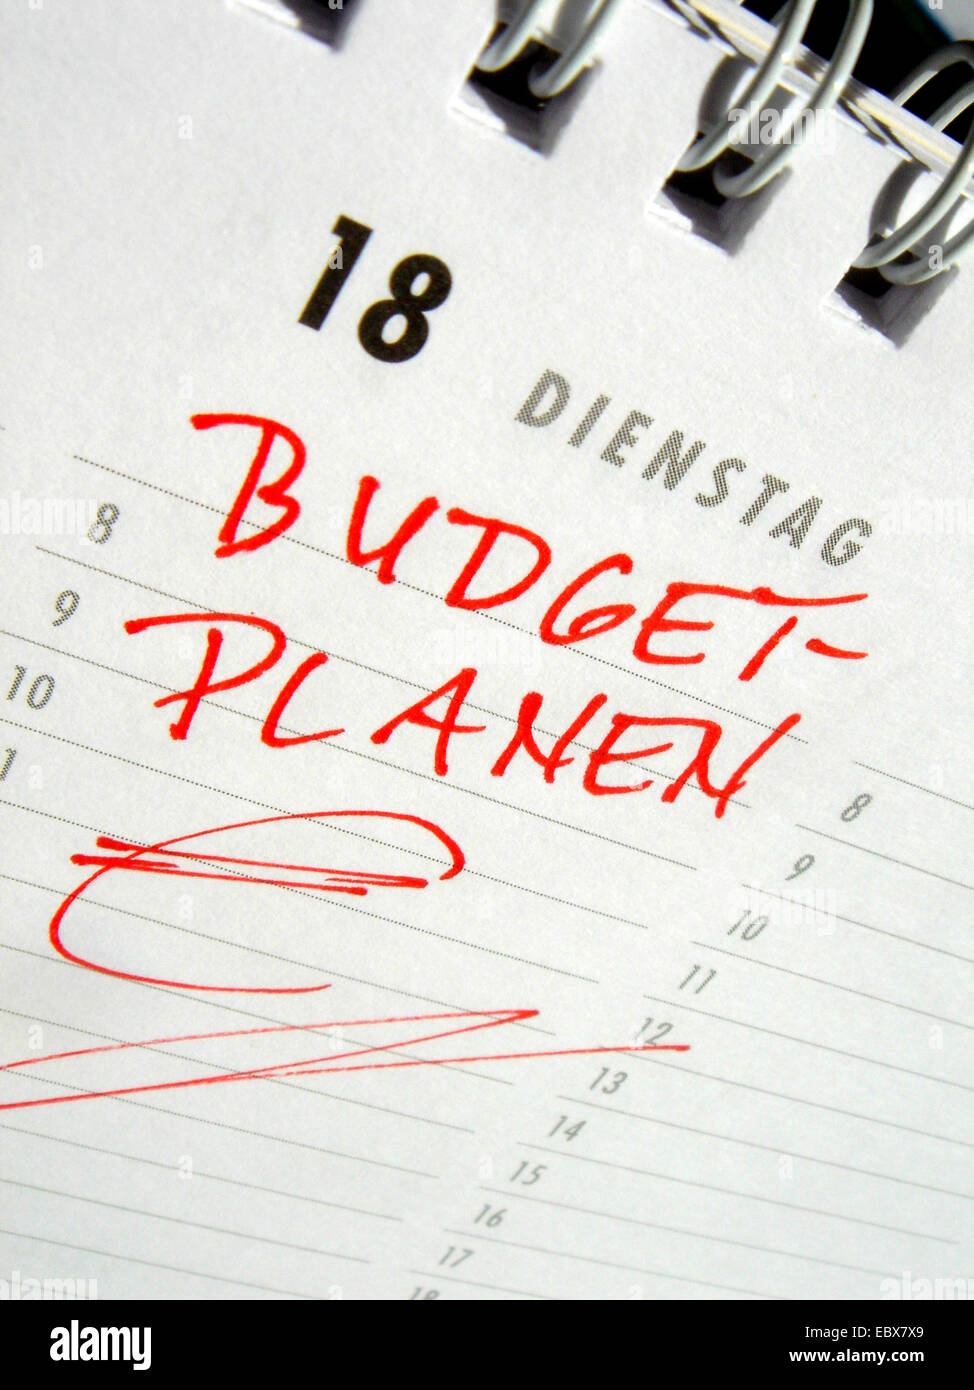 Budget plan - calendar entry Stock Photo